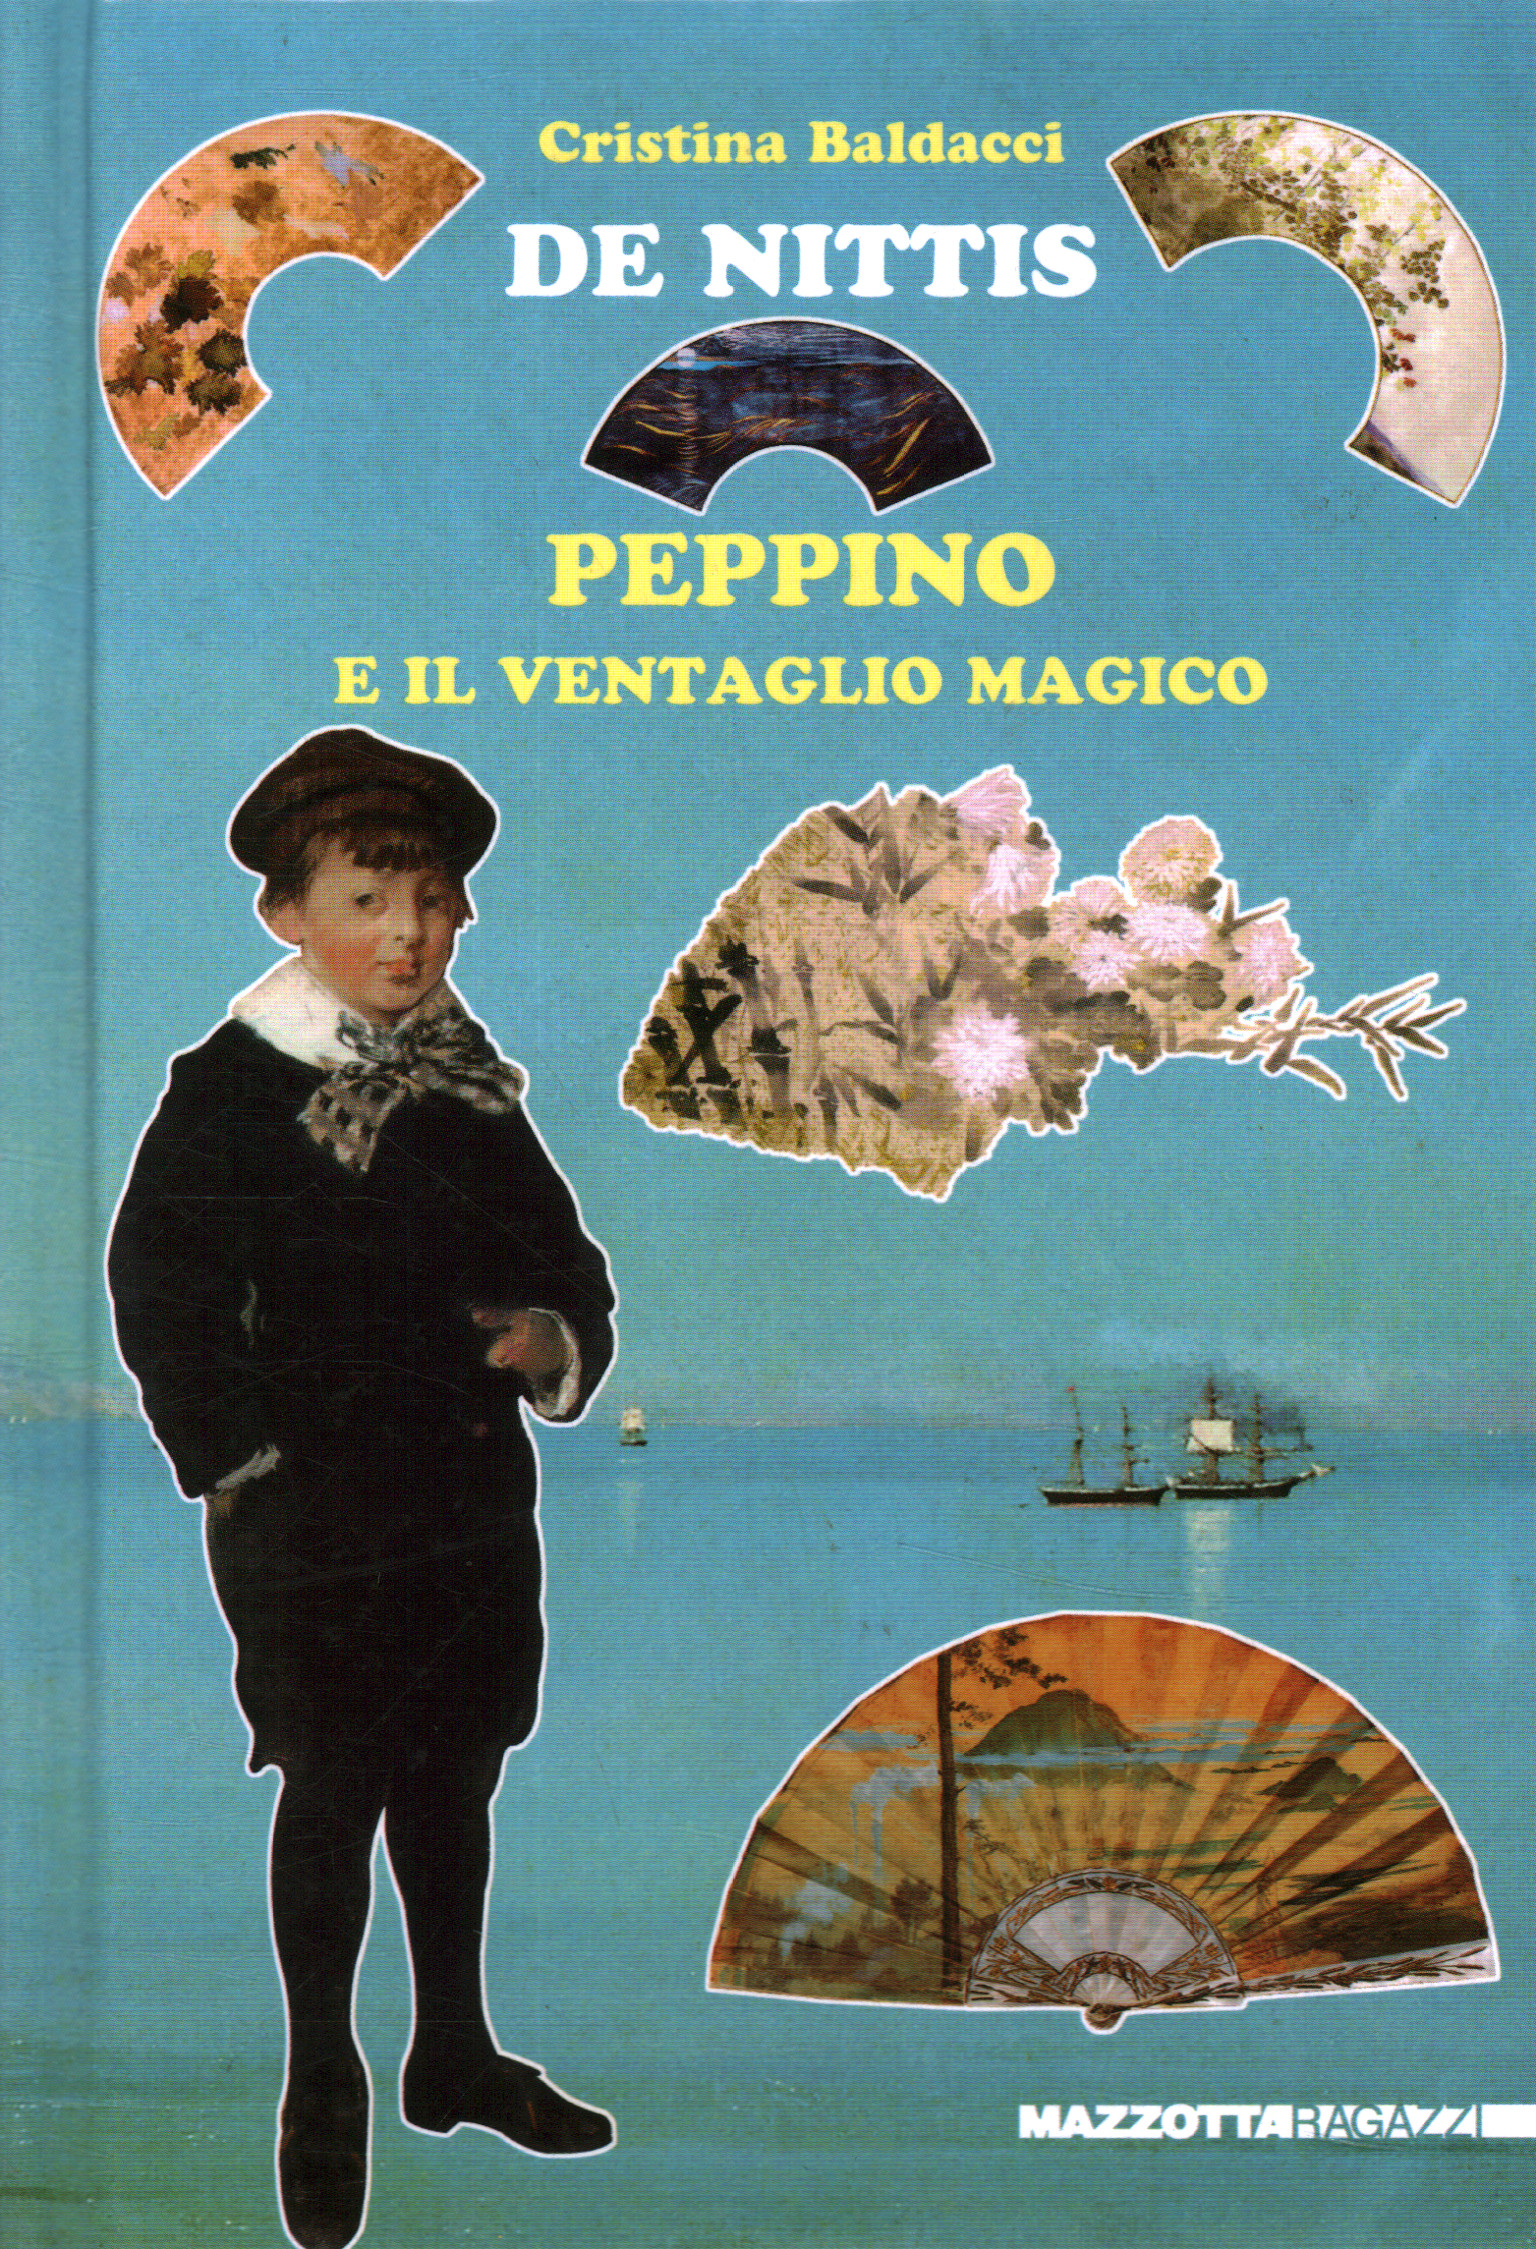 De Nittis. Peppino y la fan mágica, Cristina Baldacci